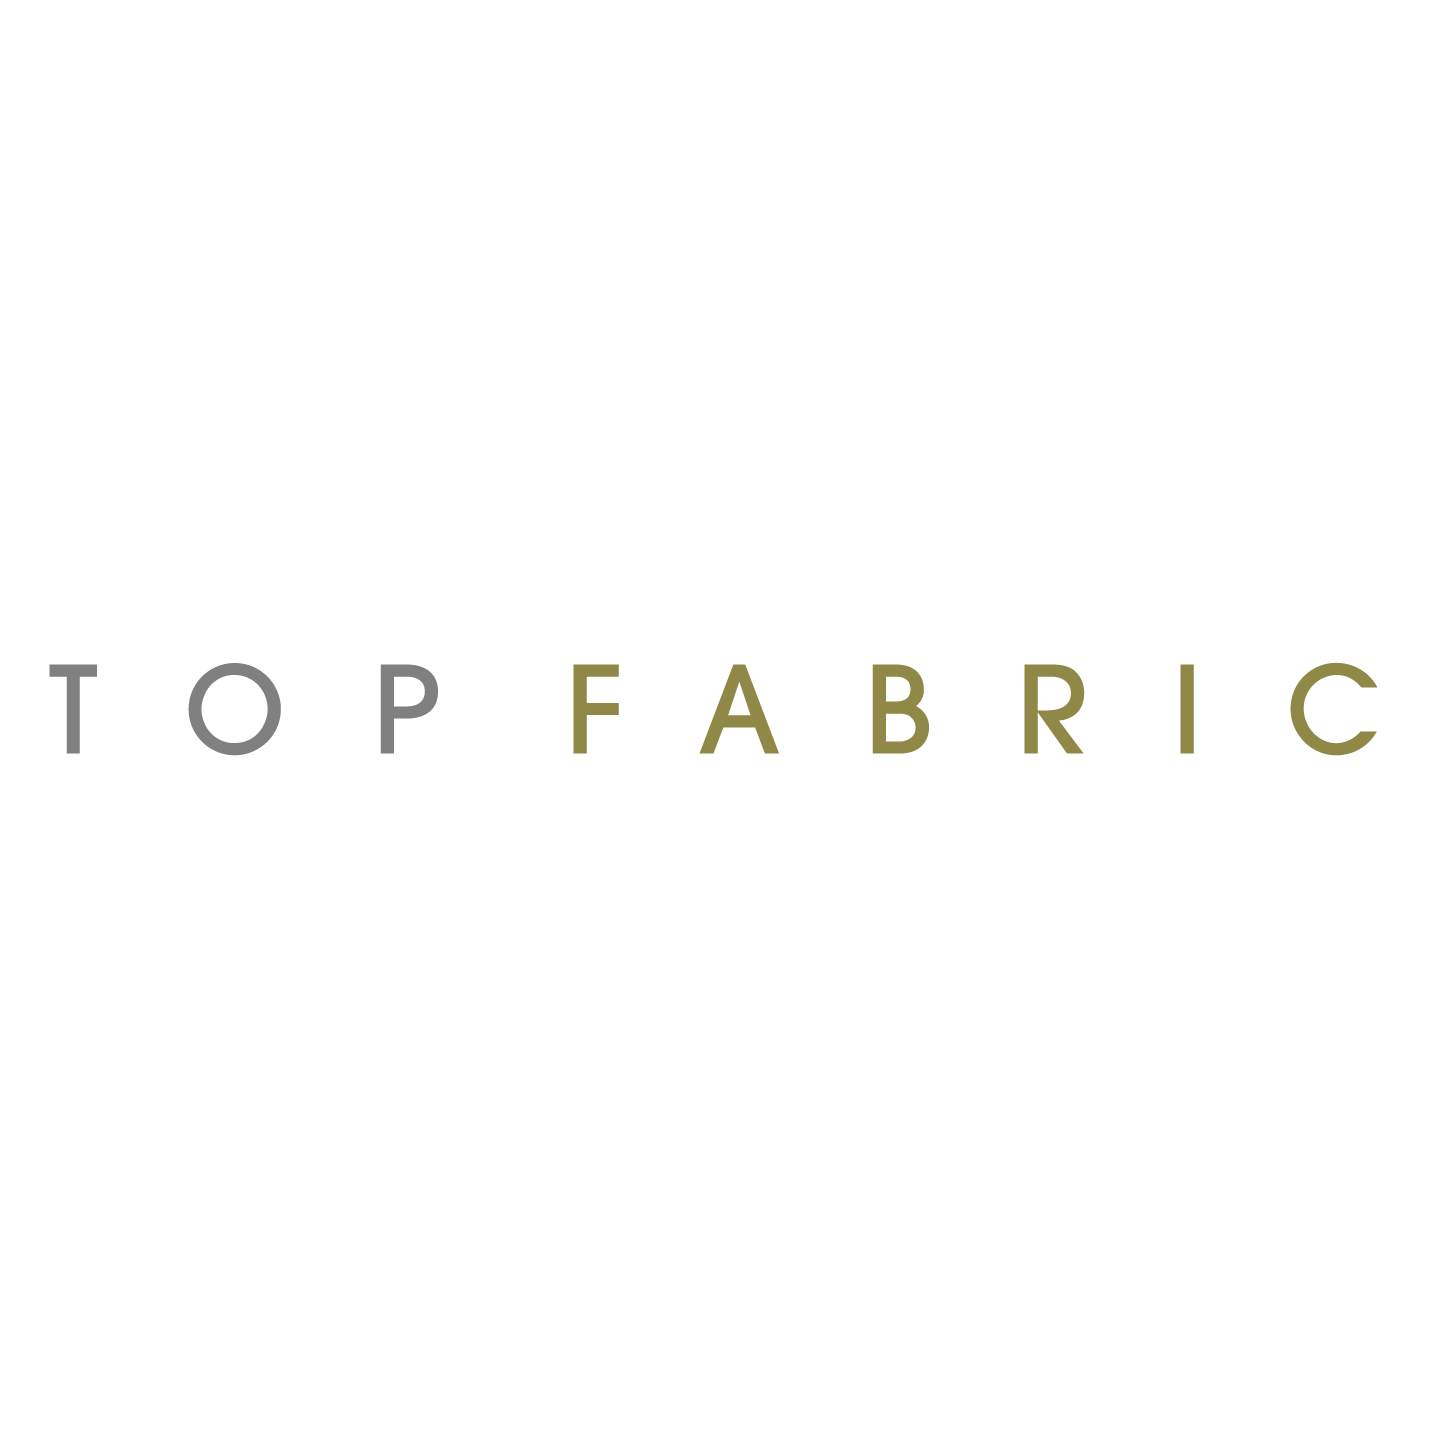 buy silk chiffon fabric online